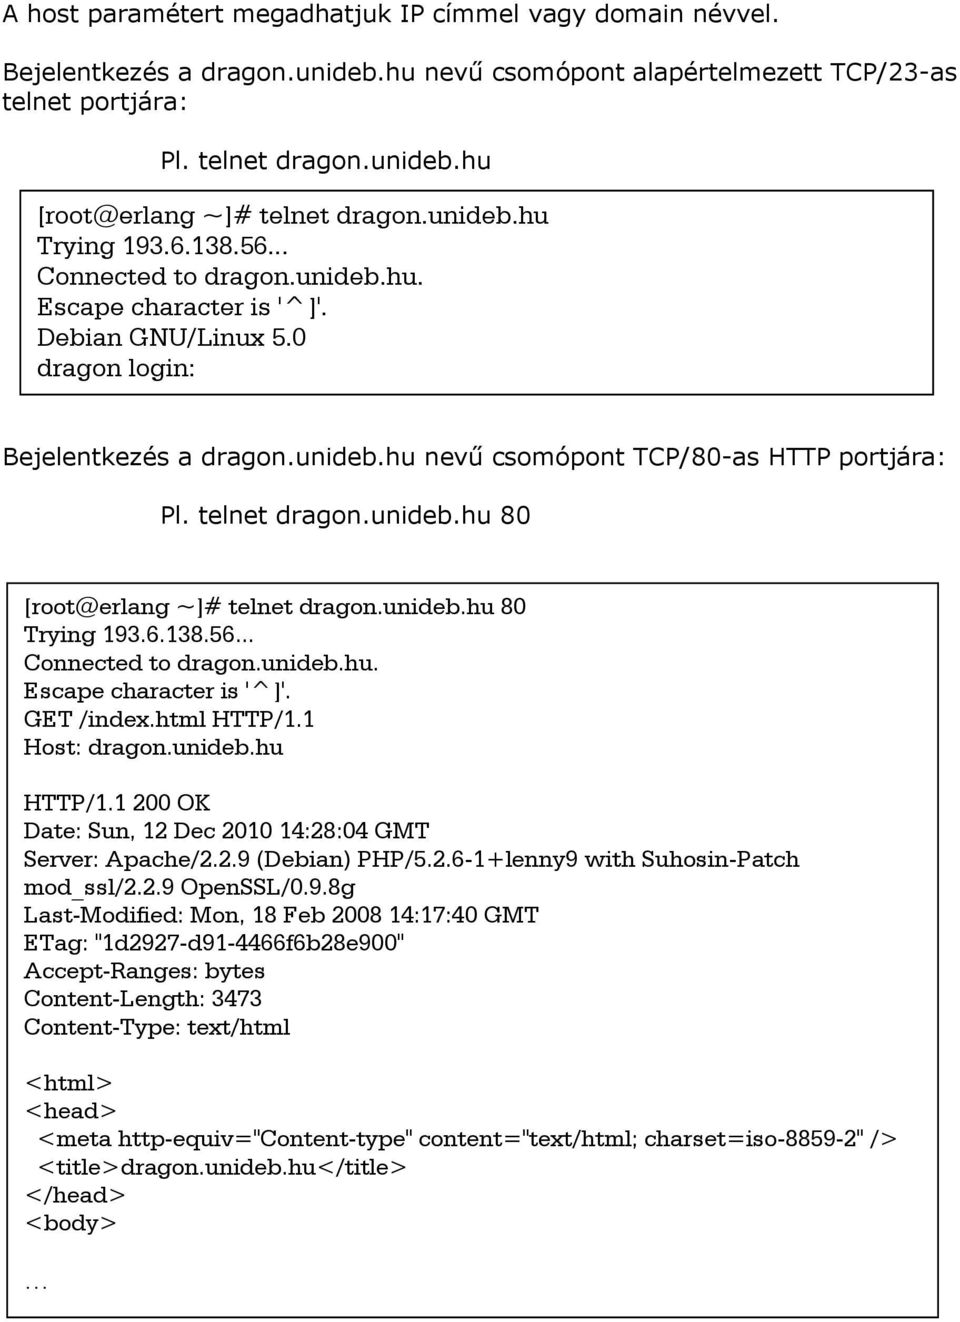 telnet dragon.unideb.hu 80 [root@erlang ~]# telnet dragon.unideb.hu 80 Trying 193.6.138.56... Connected to dragon.unideb.hu. Escape character is '^]'. GET /index.html HTTP/1.1 Host: dragon.unideb.hu HTTP/1.